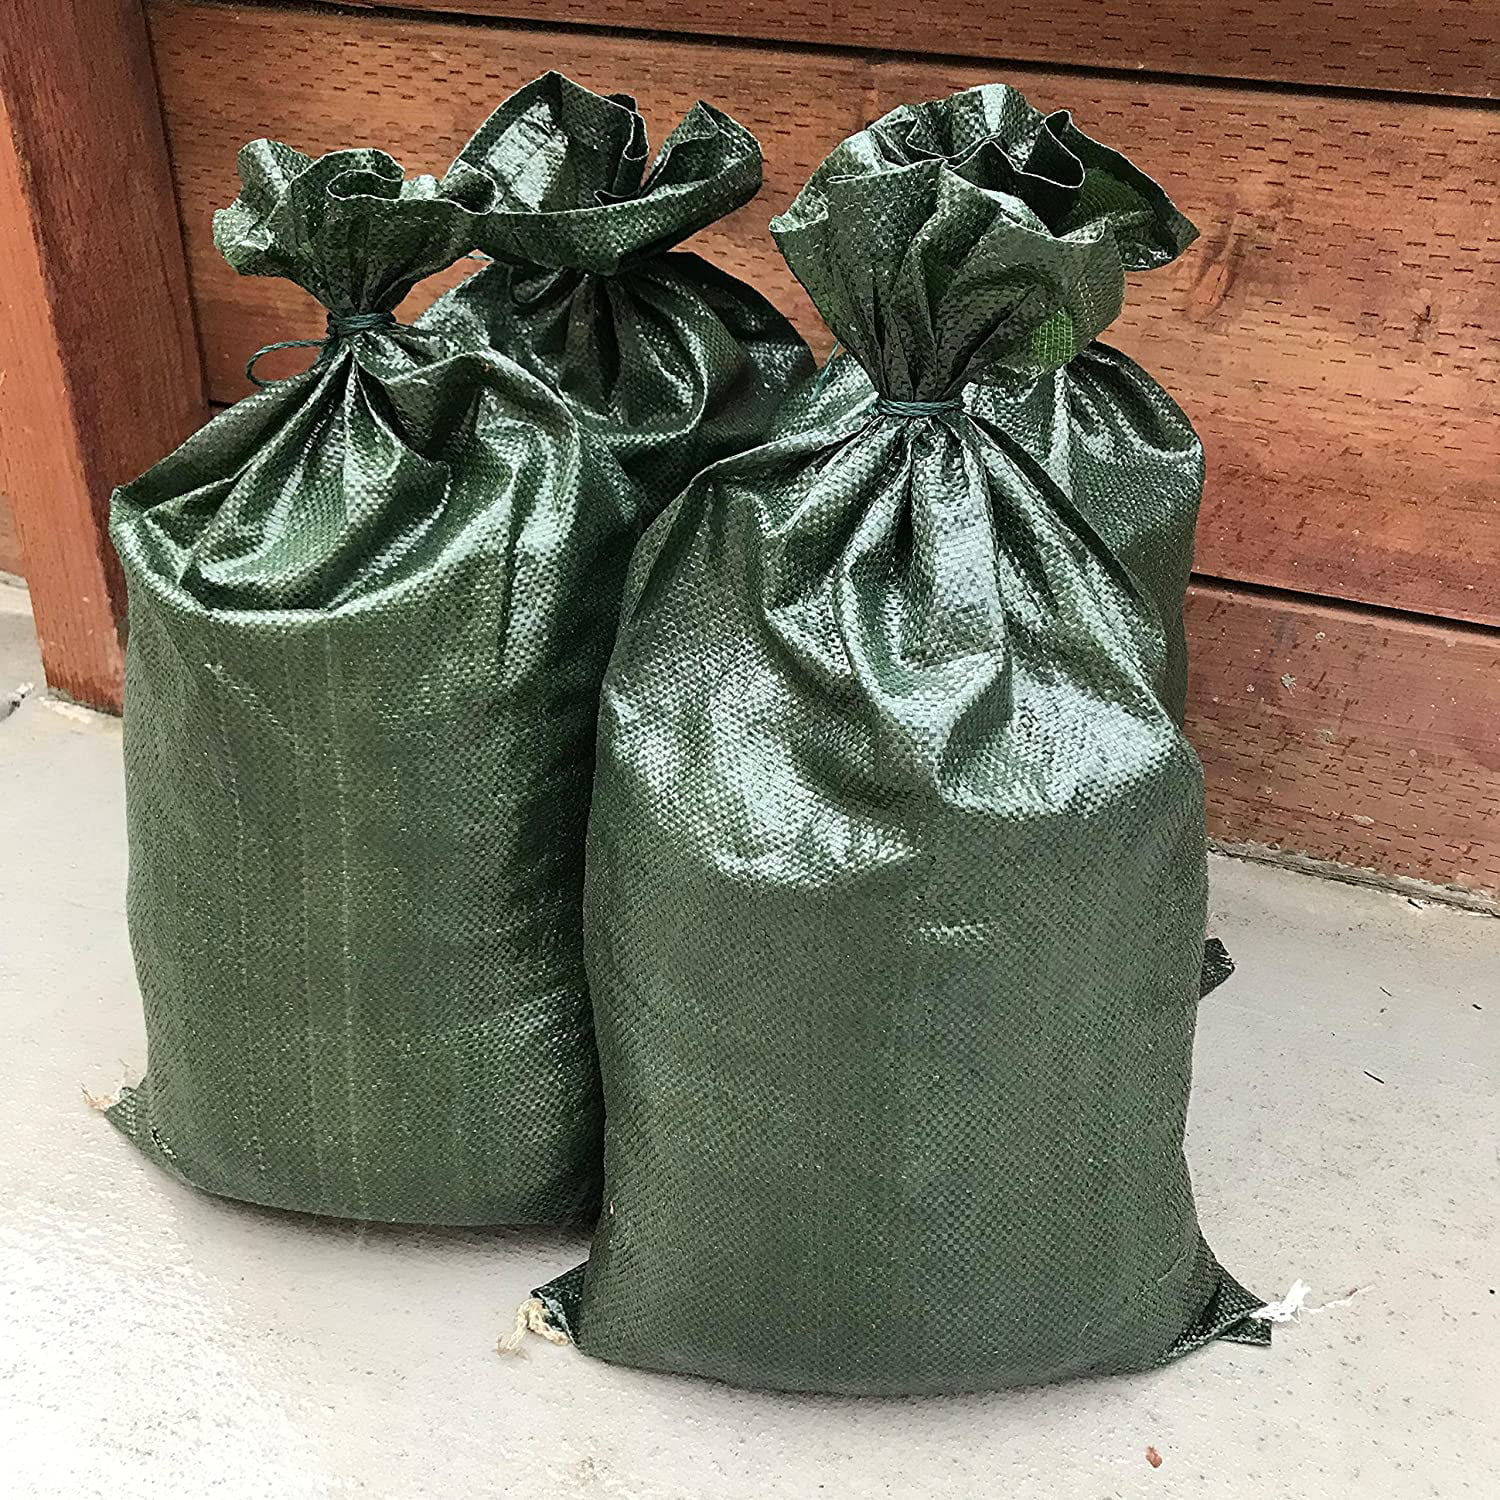 10 x Large Polypropylene Sandbags Rot Proof Sand Bags With Ties Flood Defence 